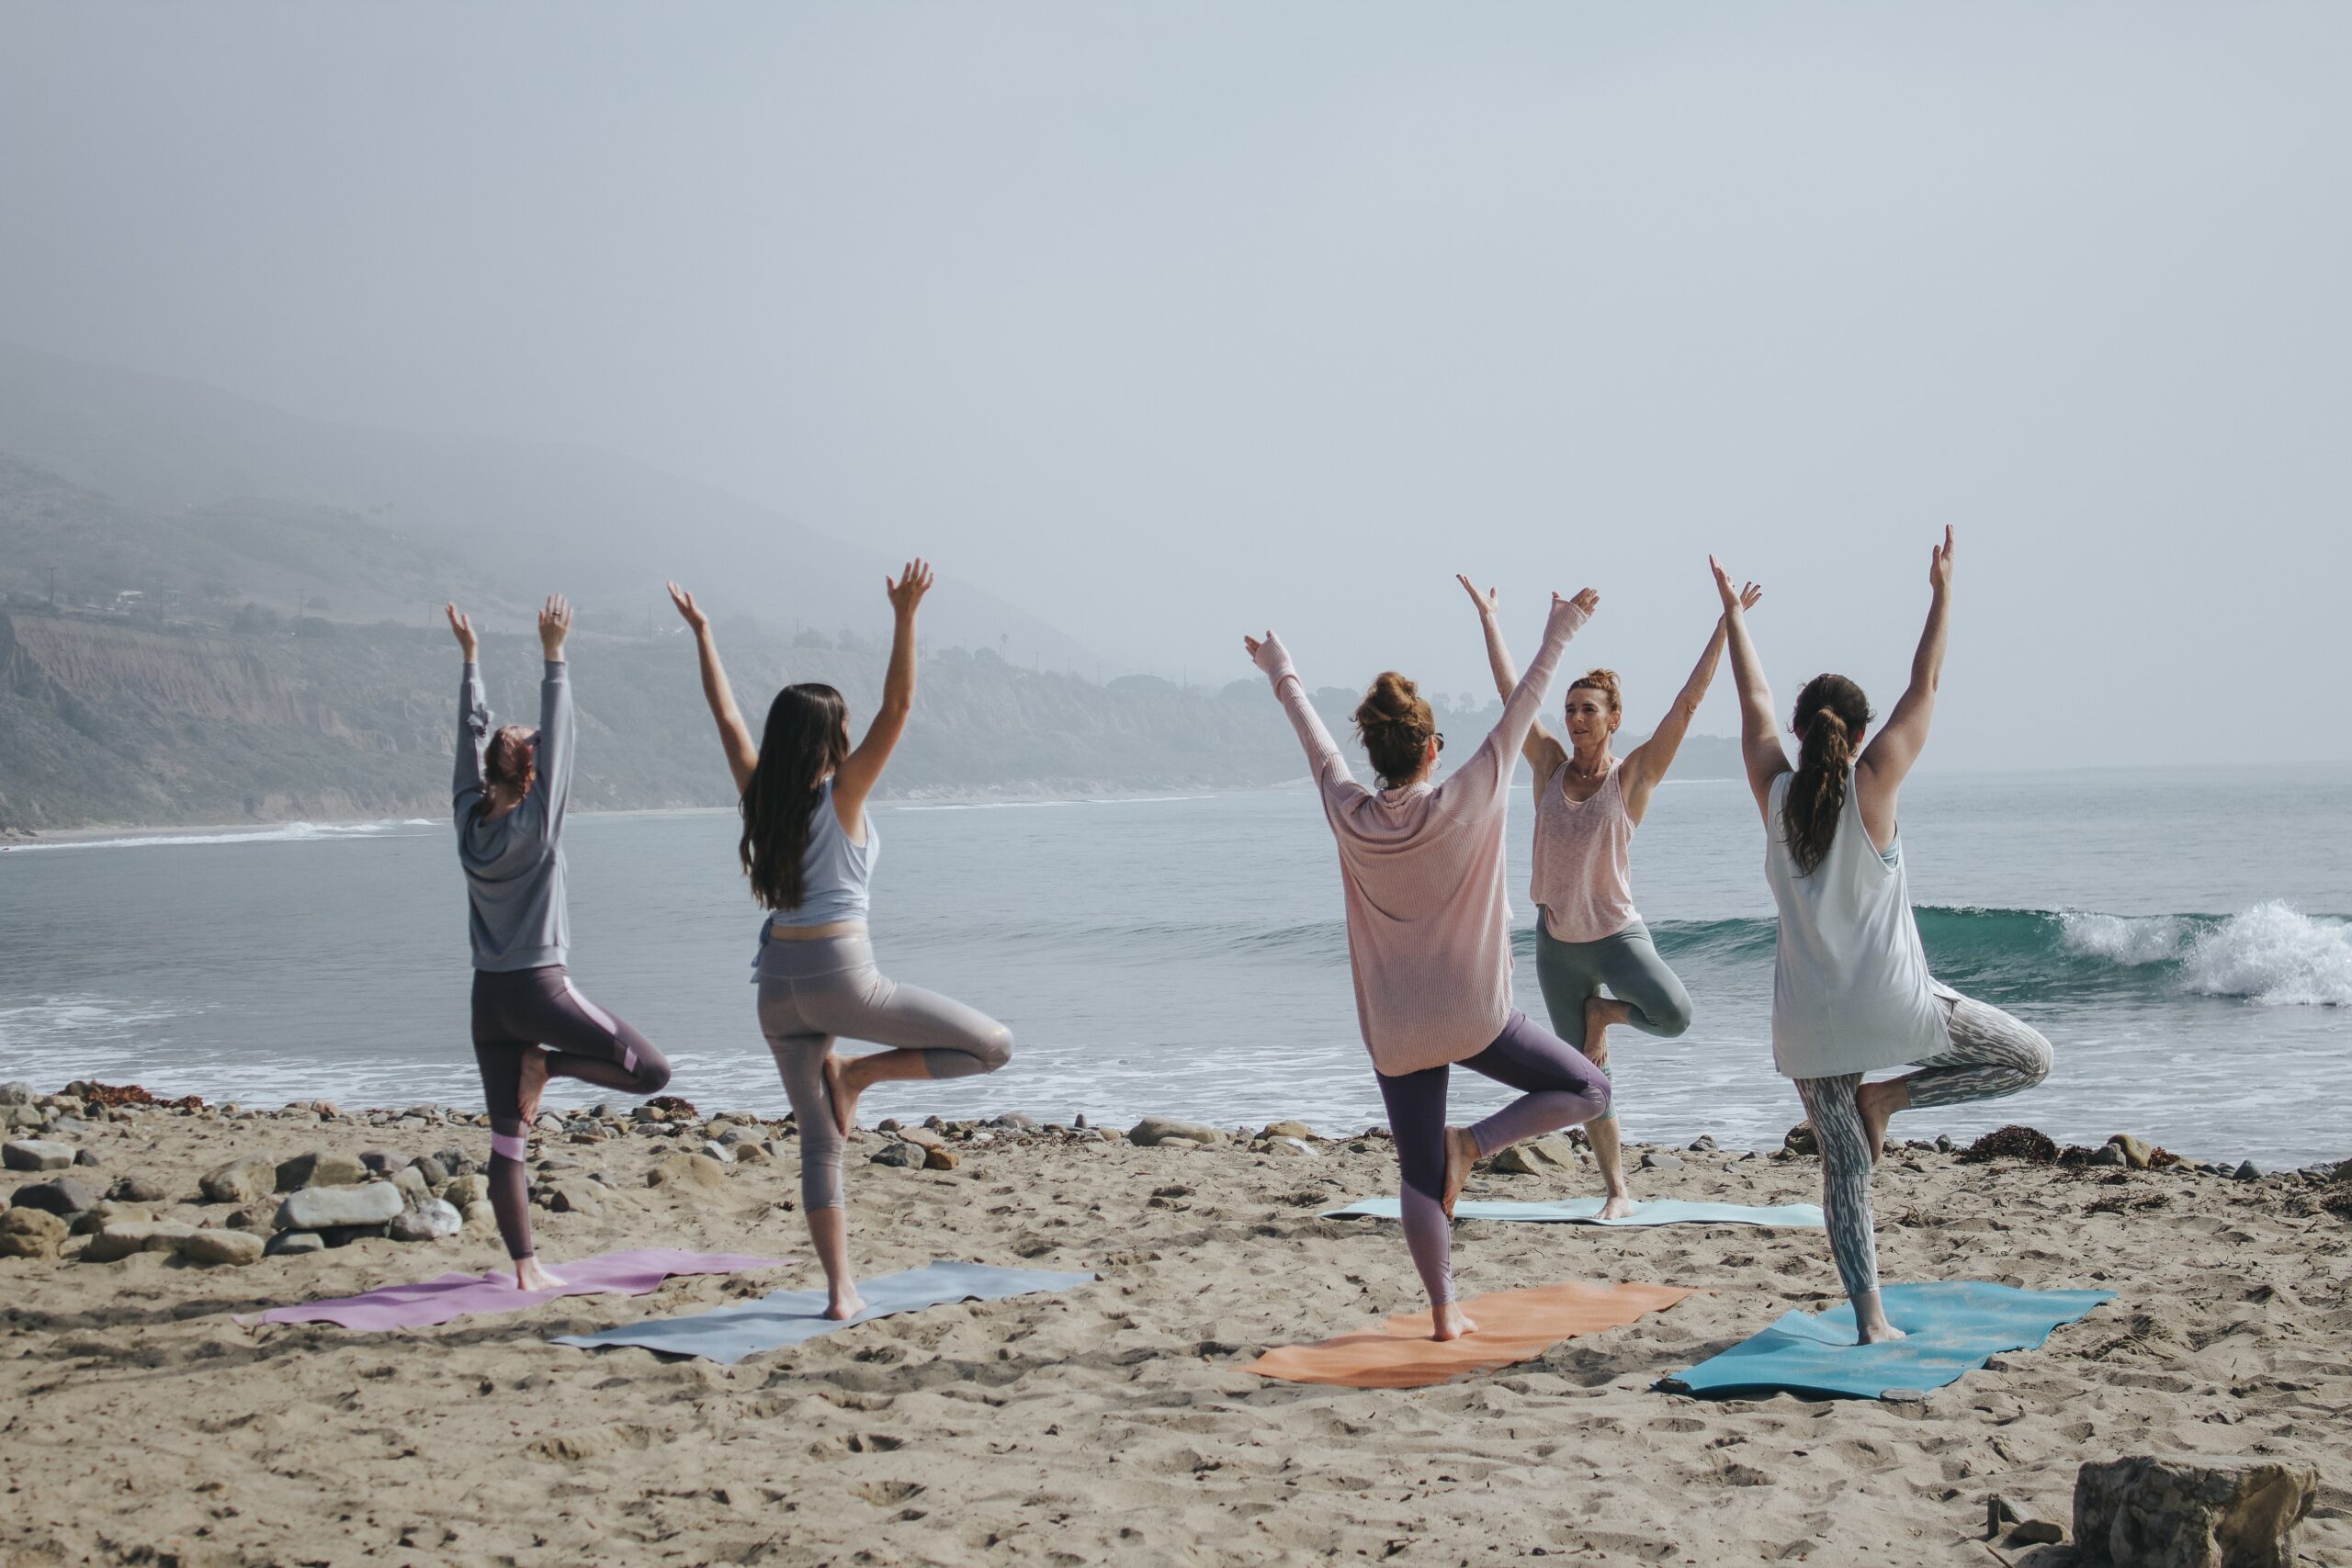 Image: Group doing beach yoga